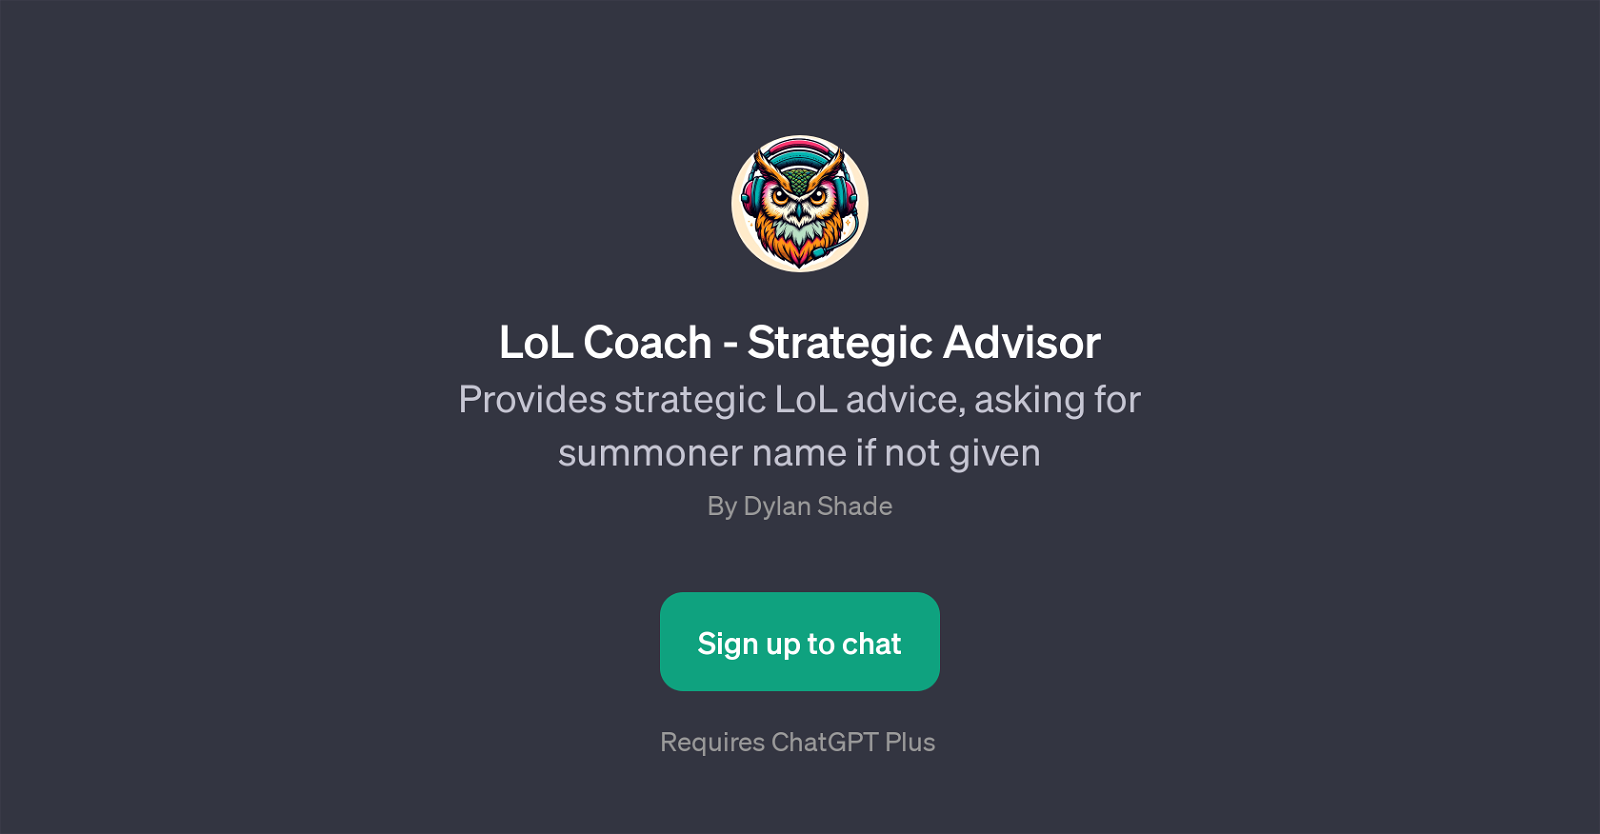 LoL Coach - Strategic Advisor website